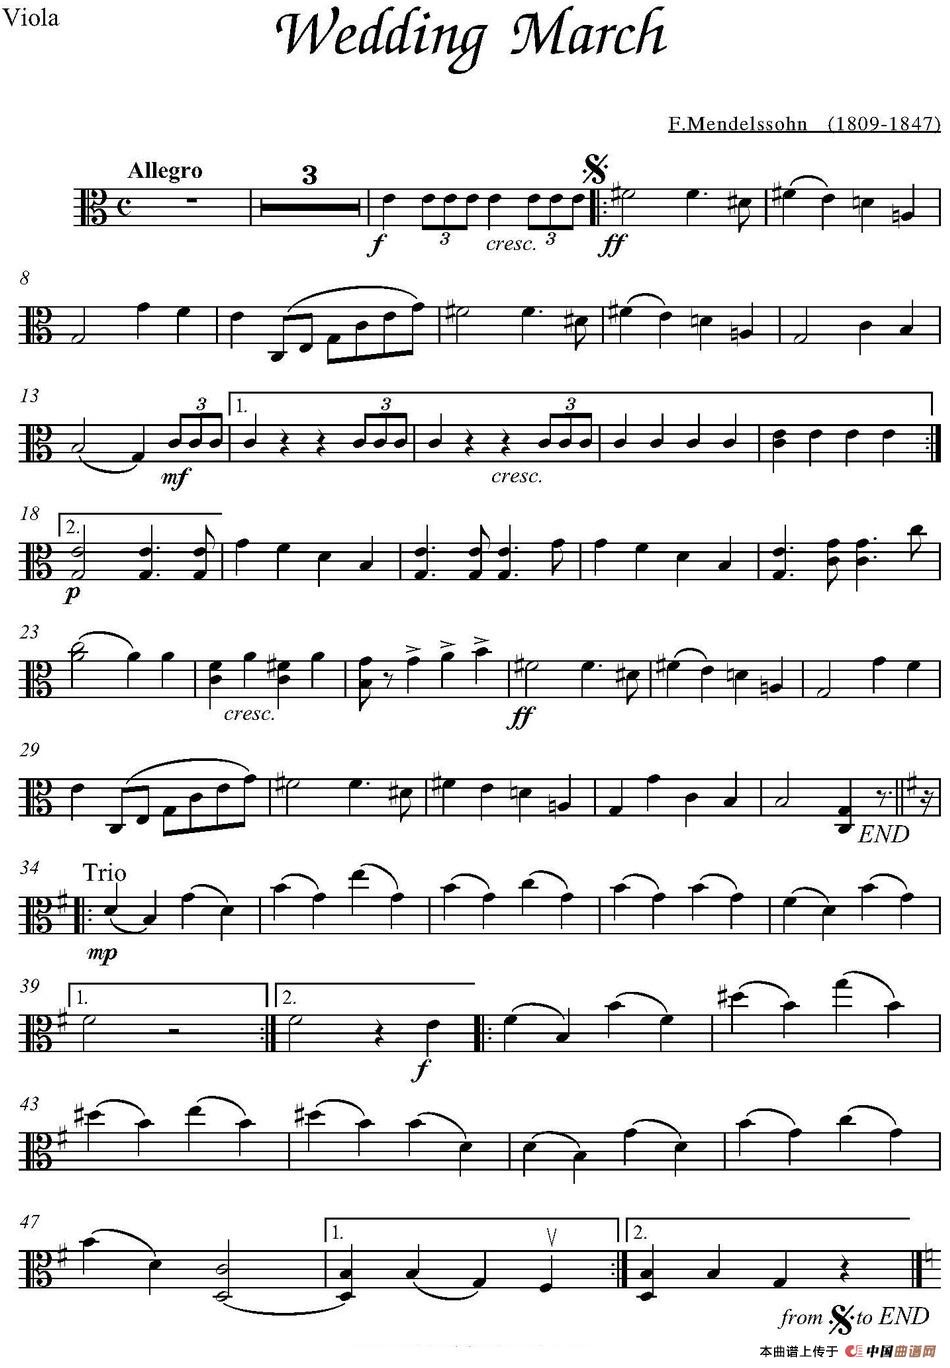 Wedding March（中提琴分谱、F.Mendelssohn作曲版）